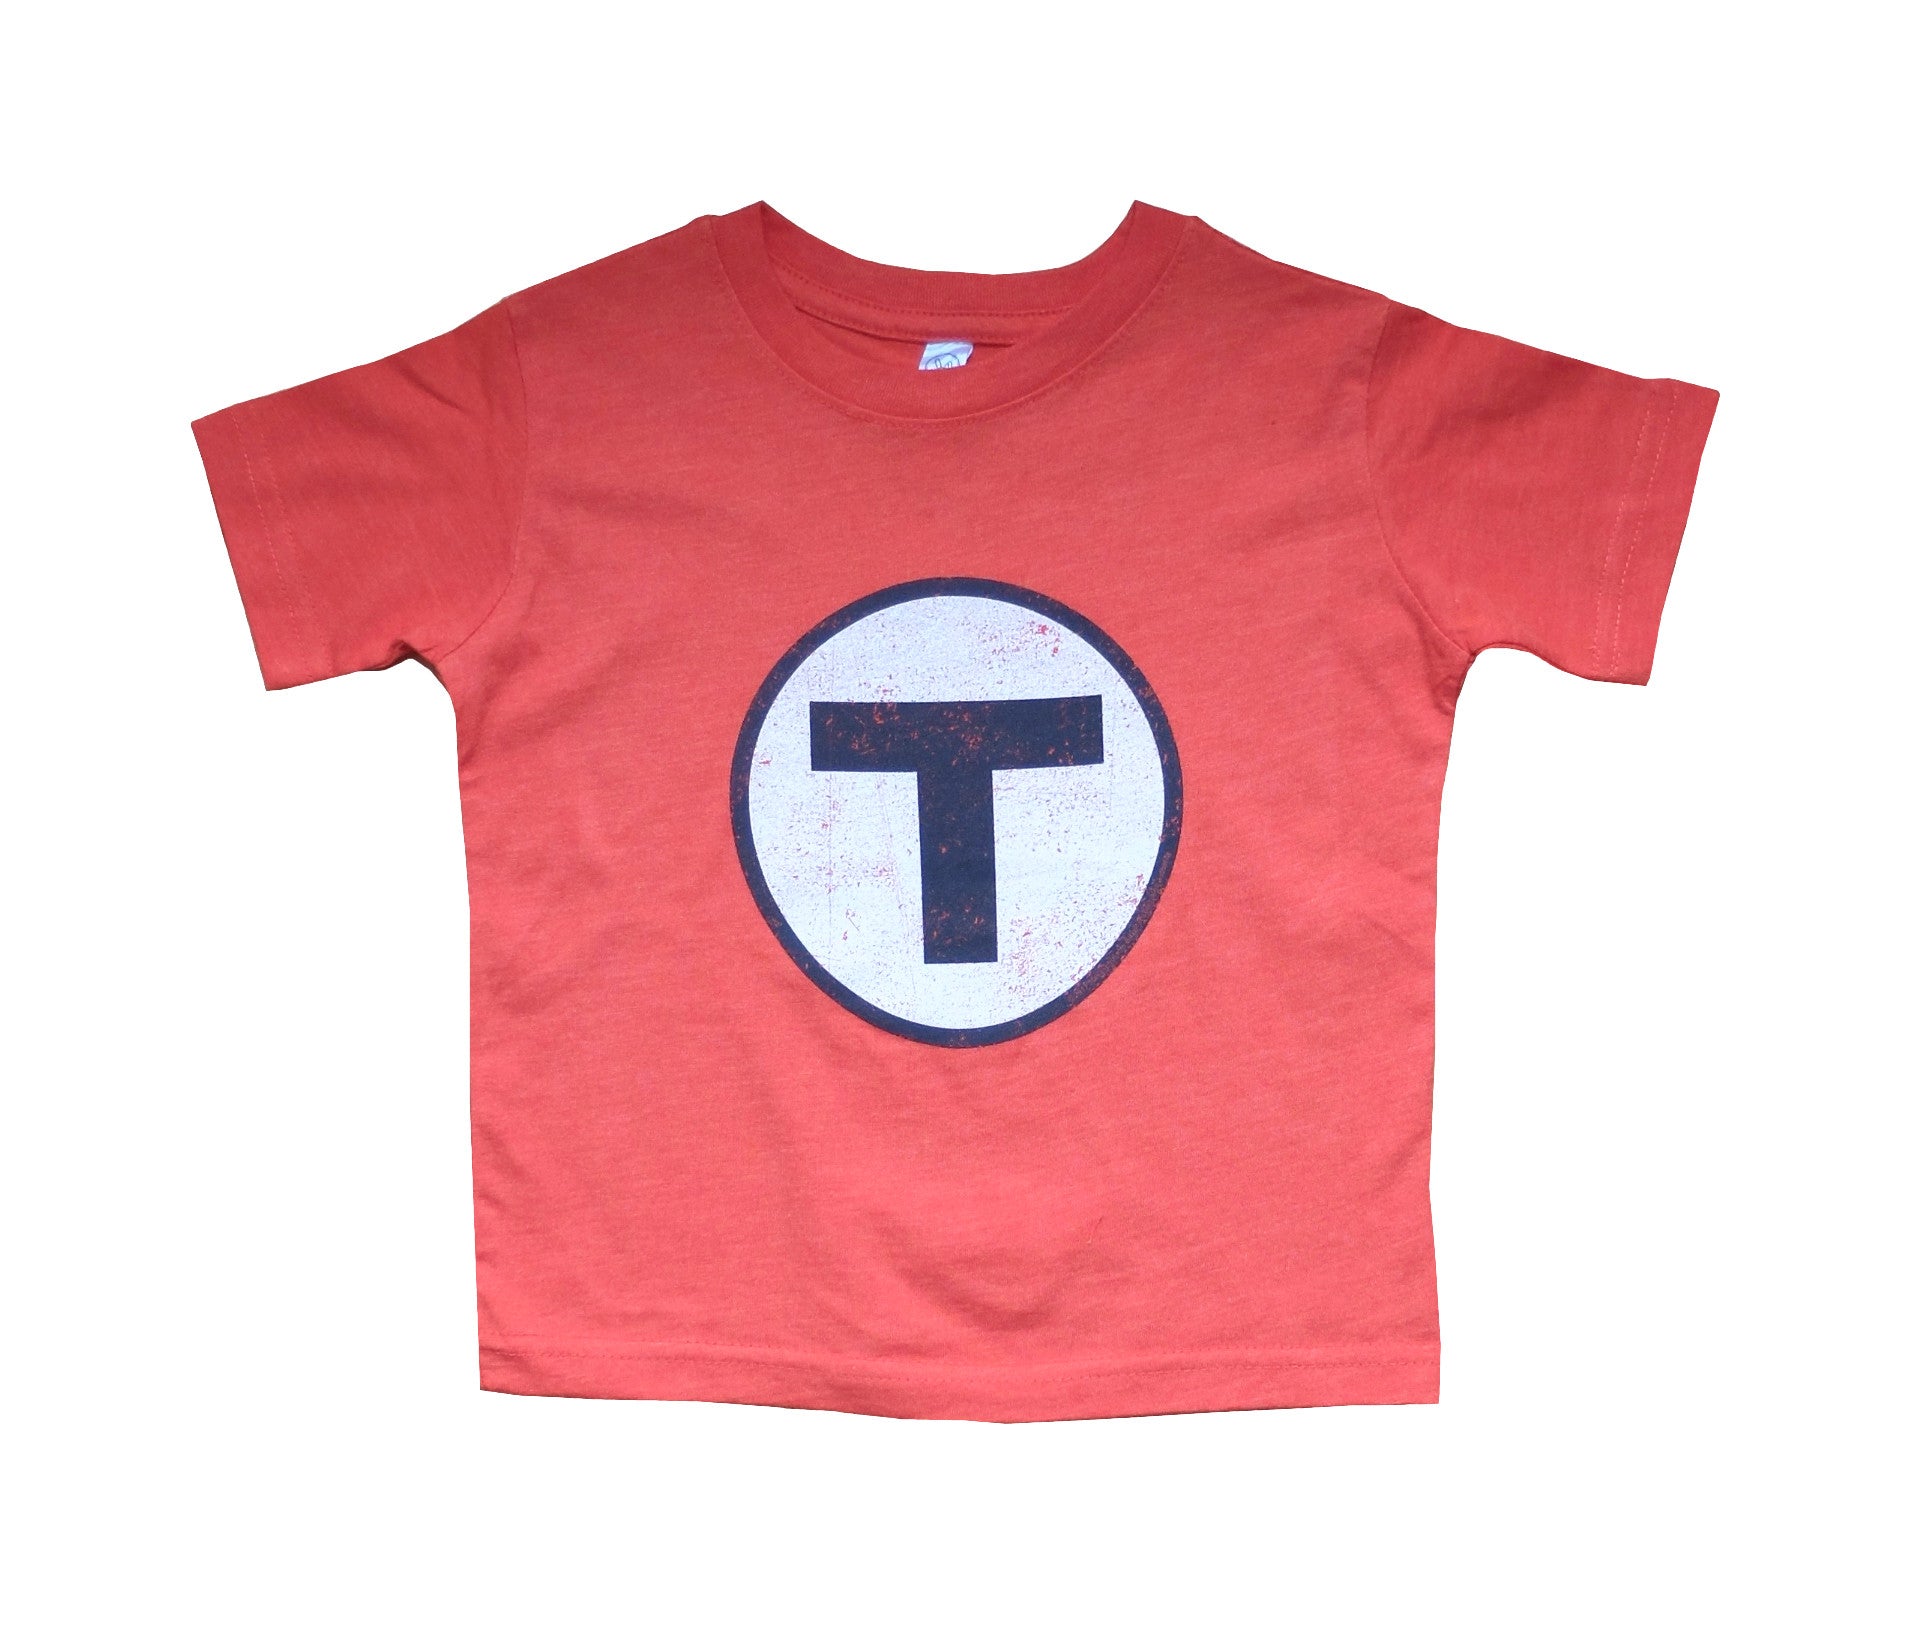 Orange T-Shirt with White & Black MBTA "T" Logo